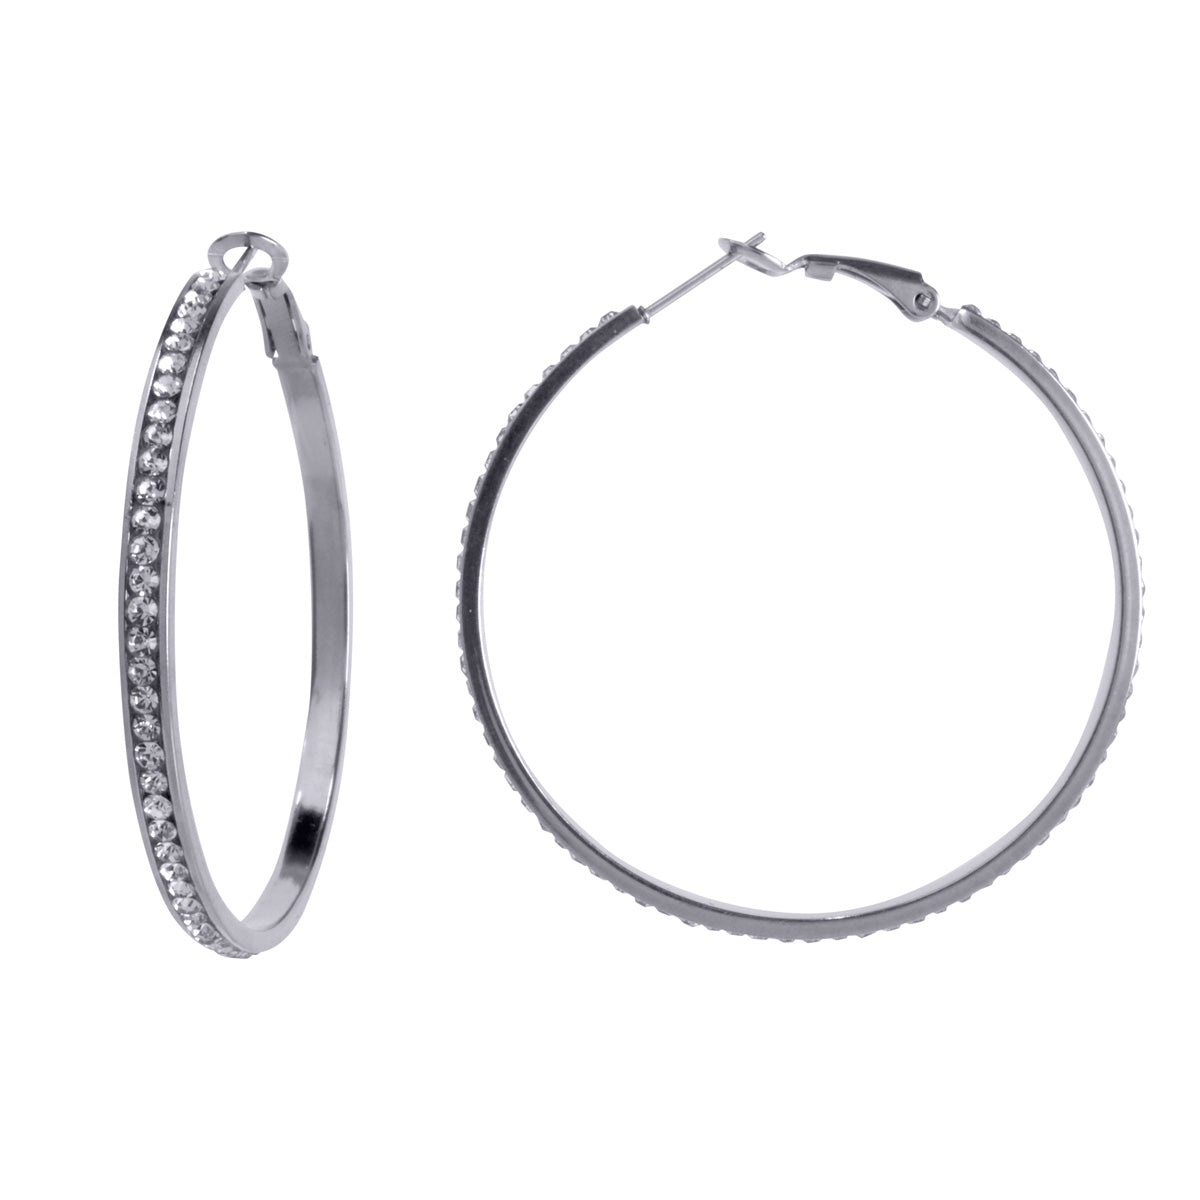 Rhinestone ring earrings 4,7cm (steel 316L)